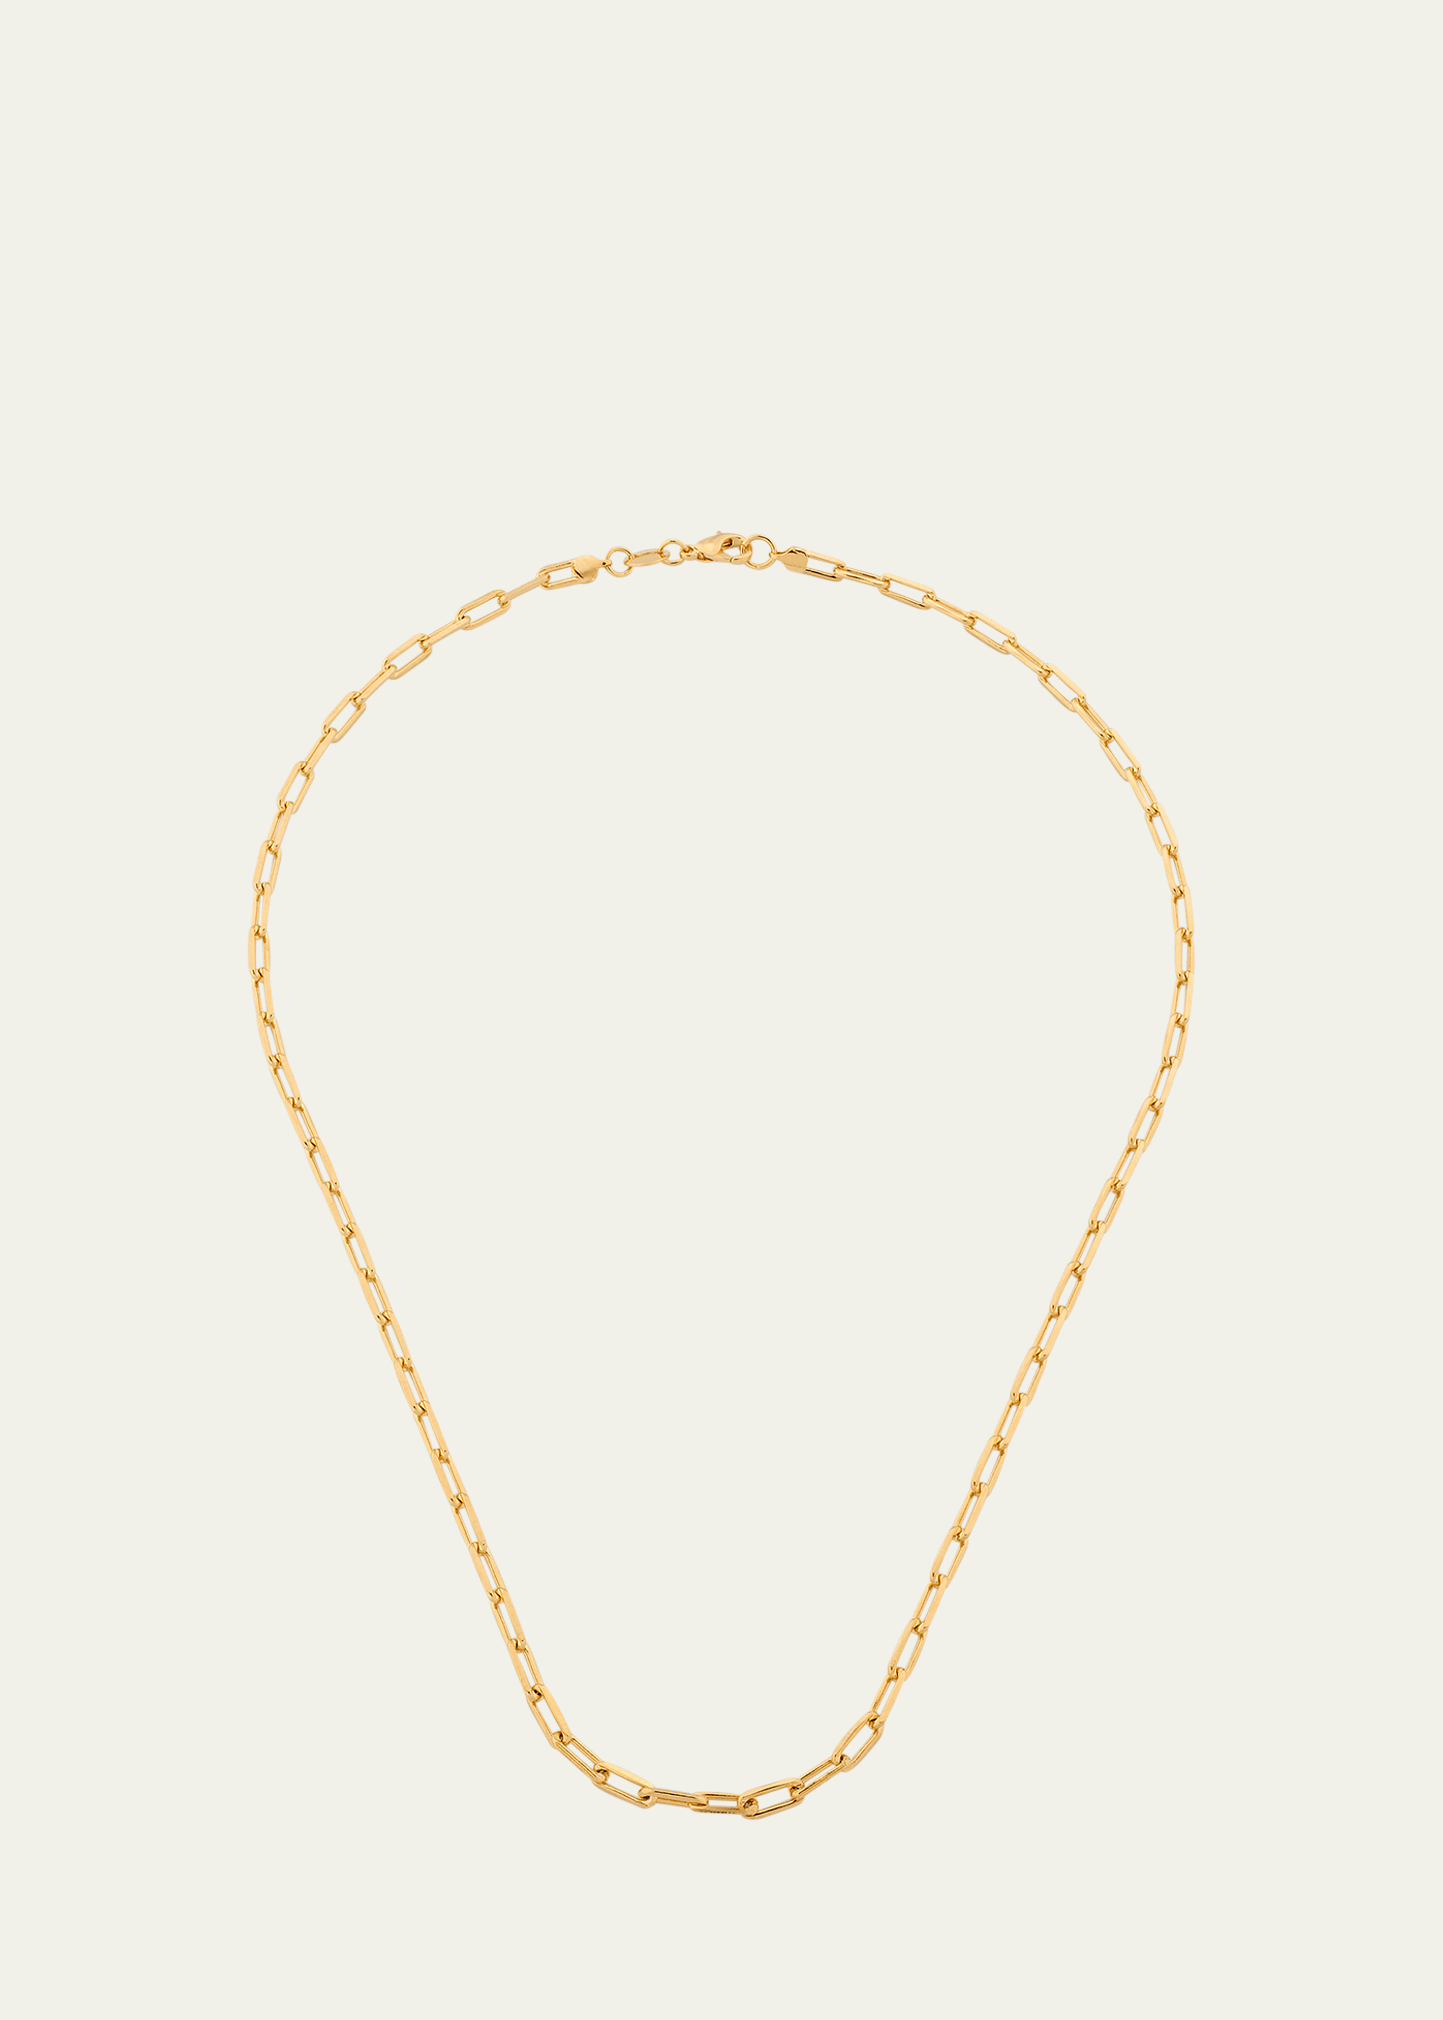 V.bellan Small Paperclip Link Necklace In 18k Vermeil Over